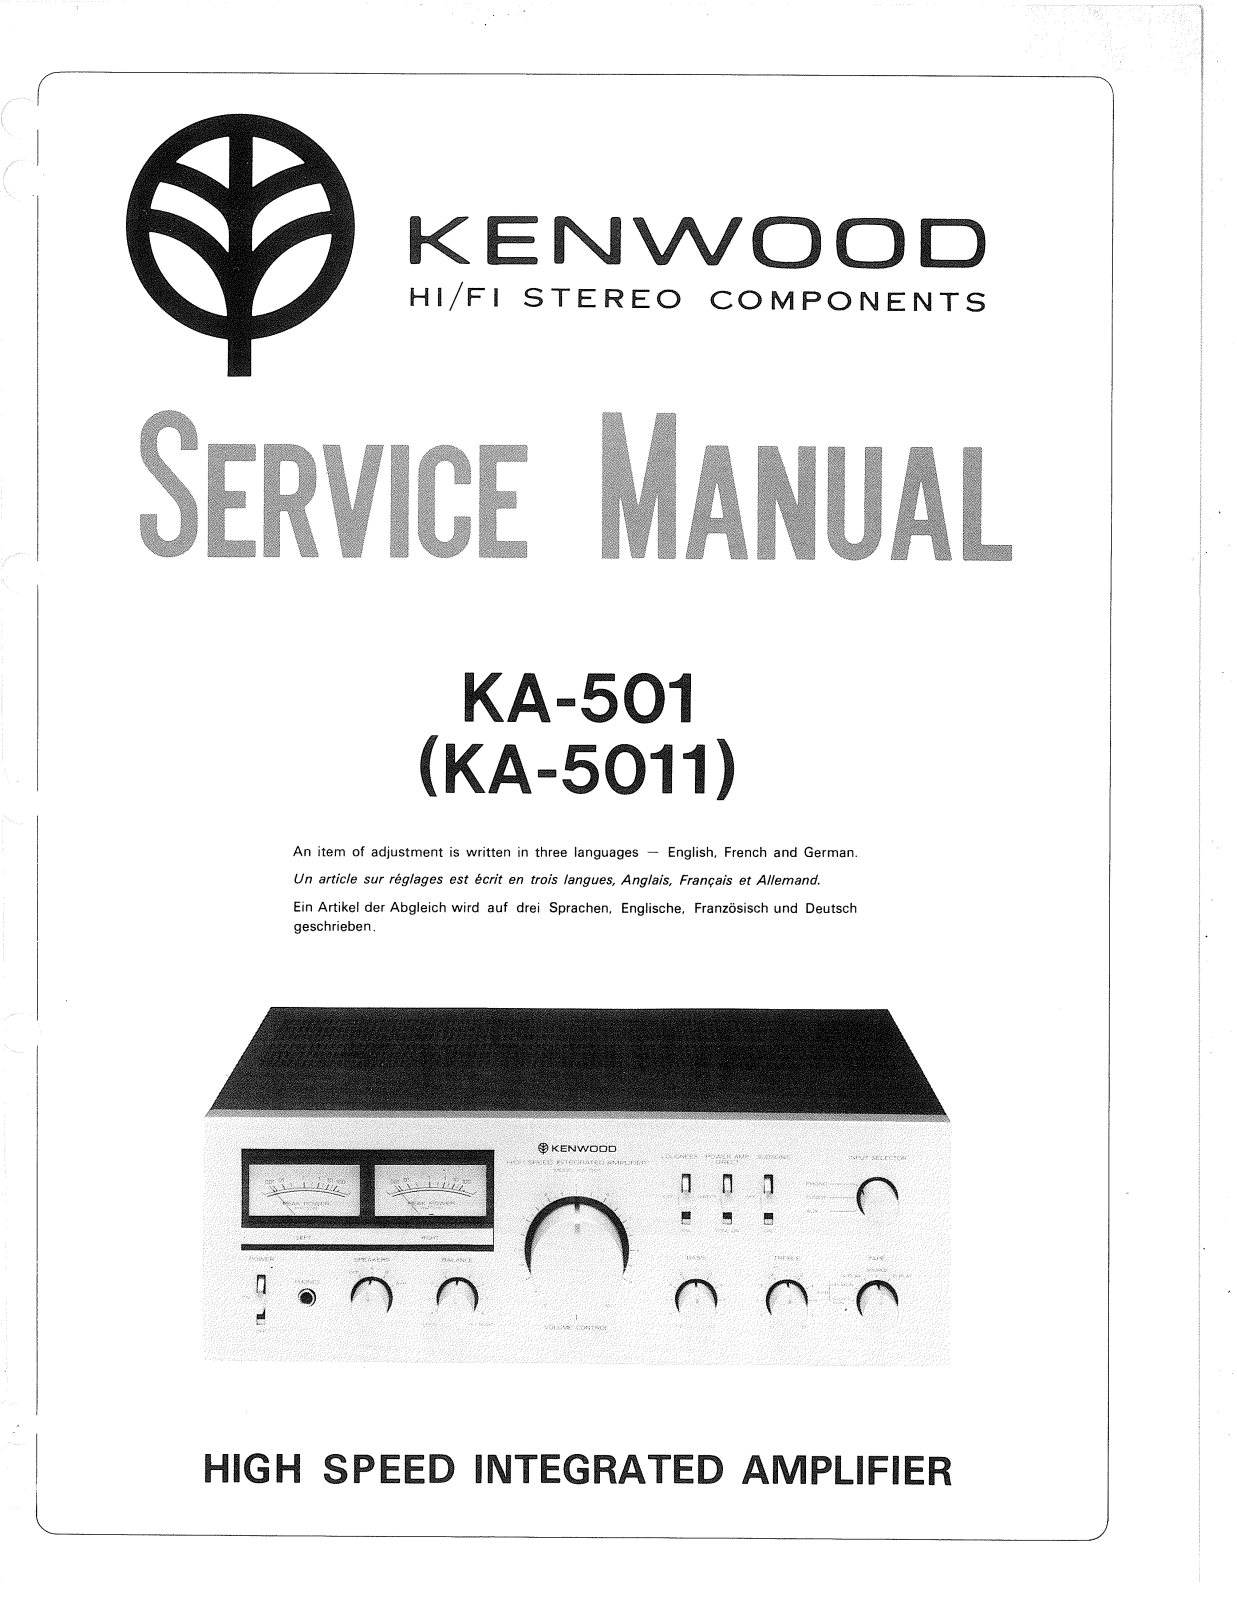 Kenwood KA-5011, KA-501 Service Manual